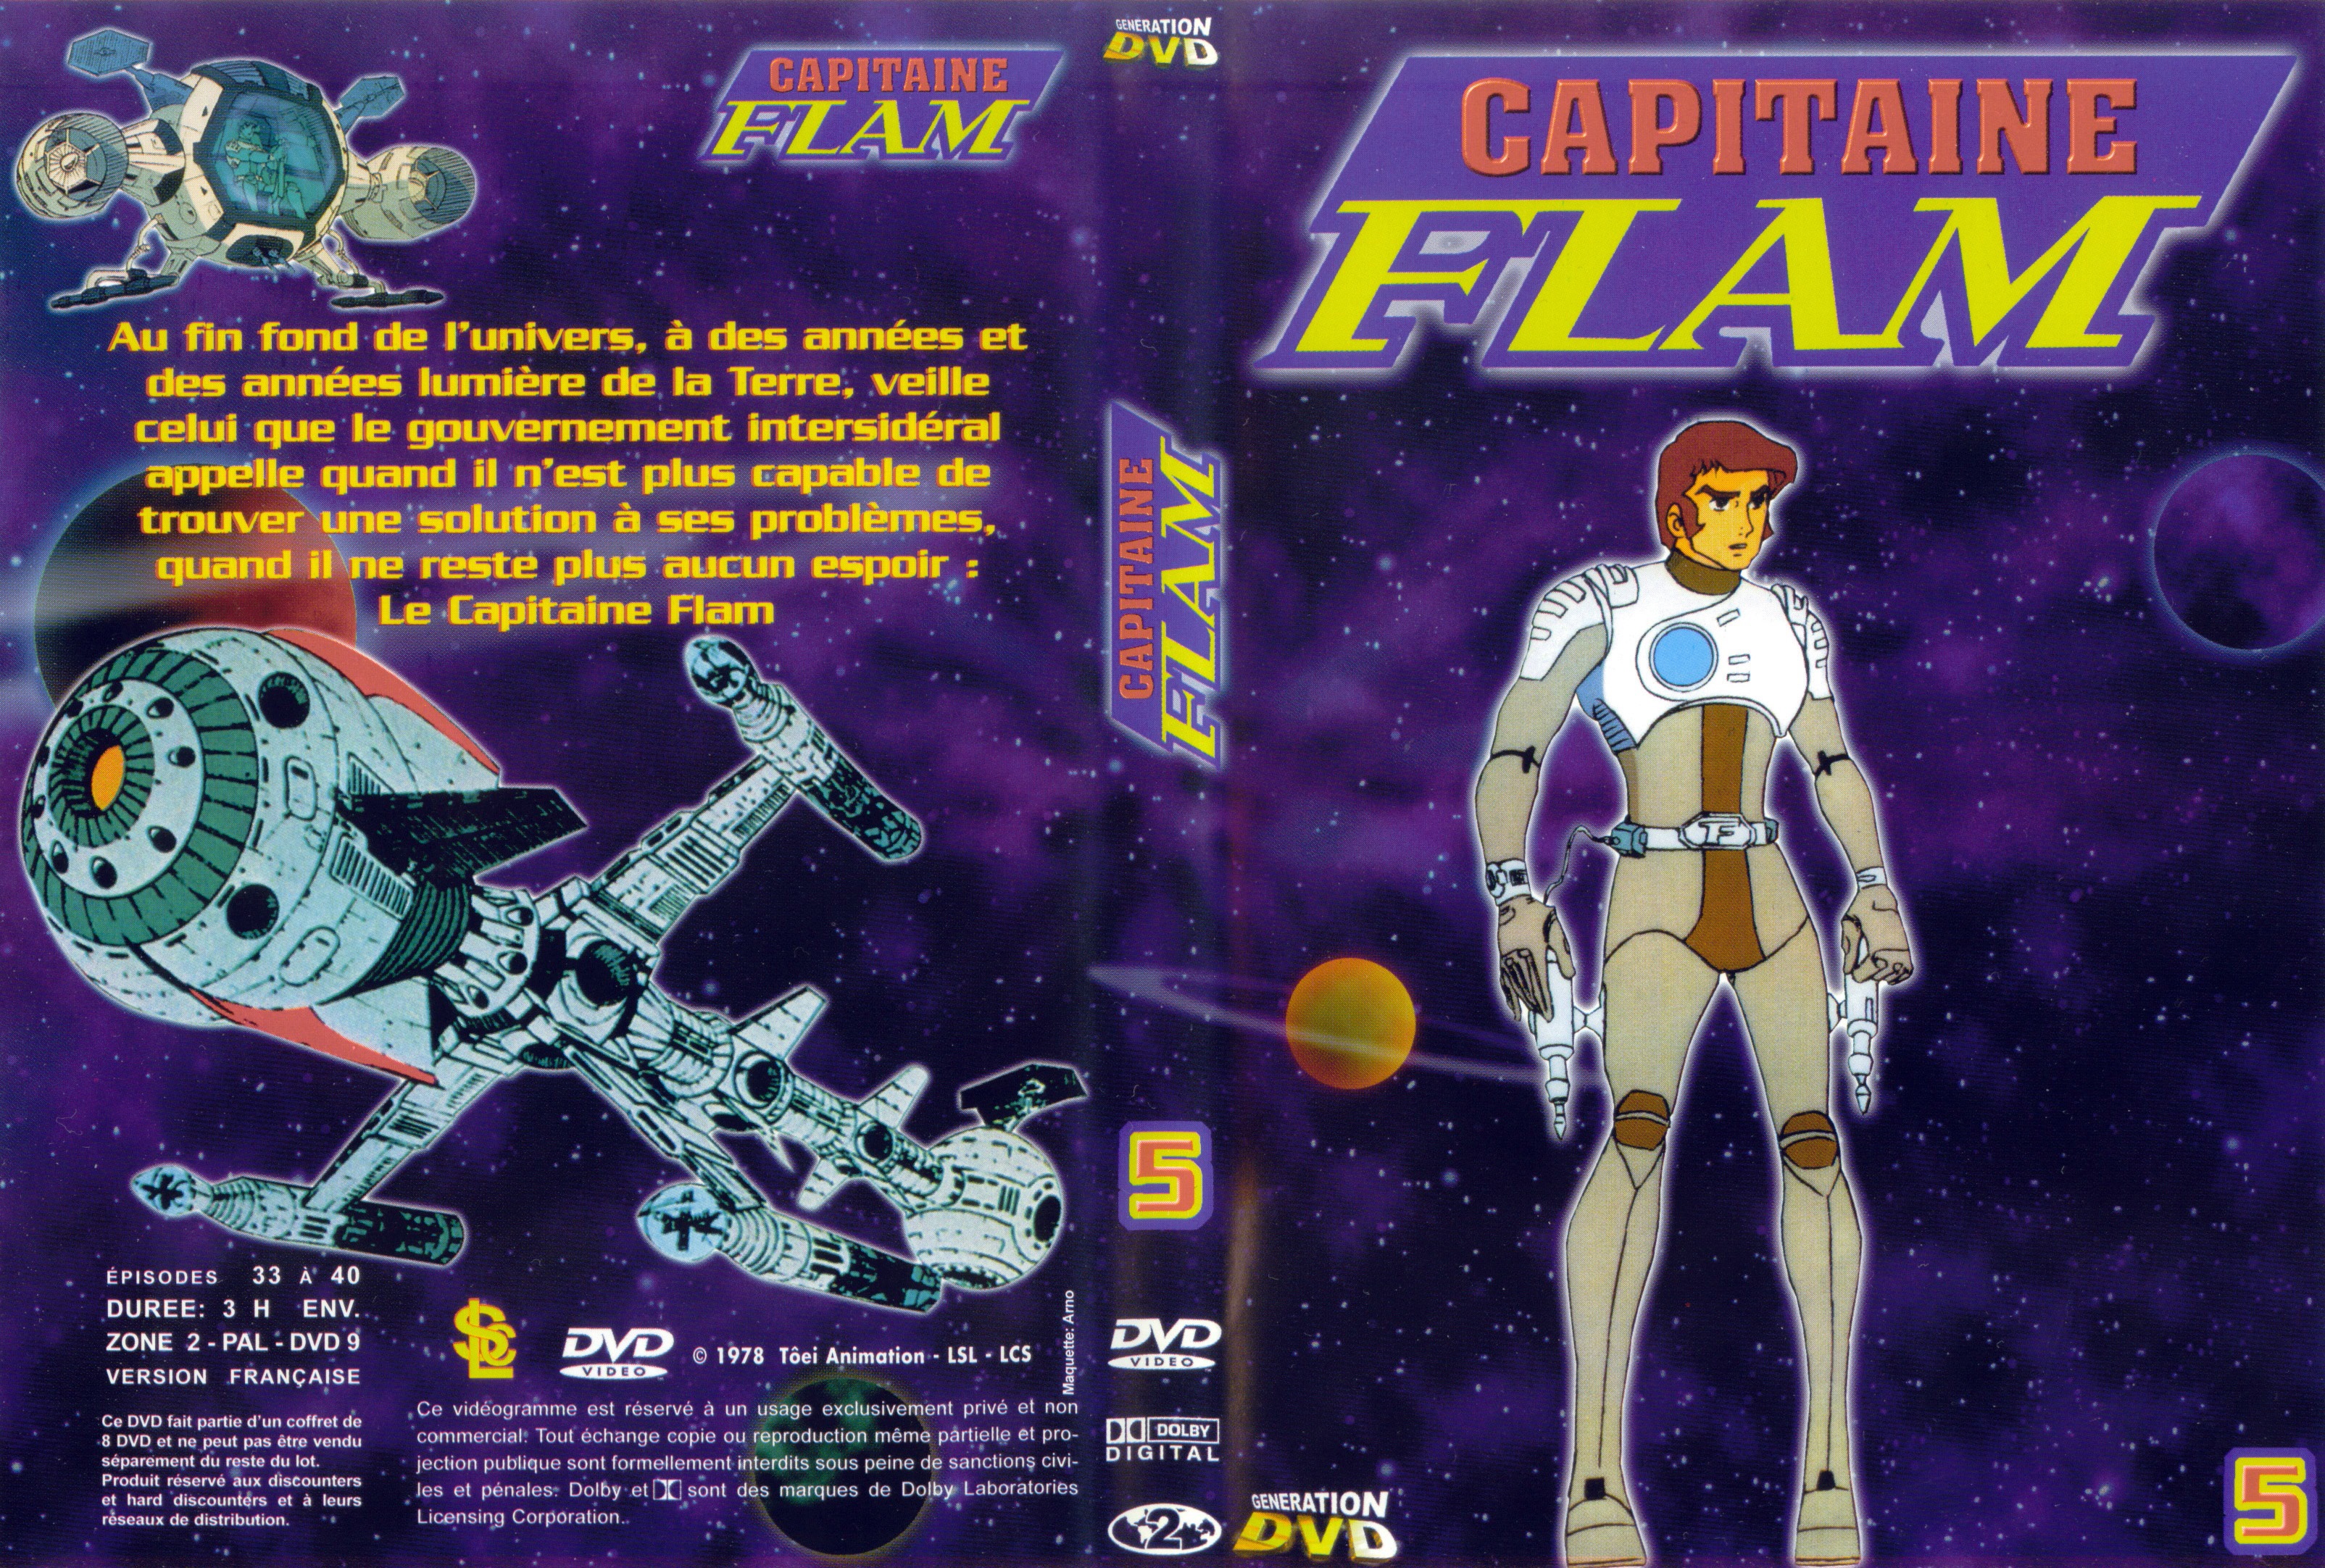 Jaquette DVD Capitaine Flam vol 5 (GENERATION DVD)